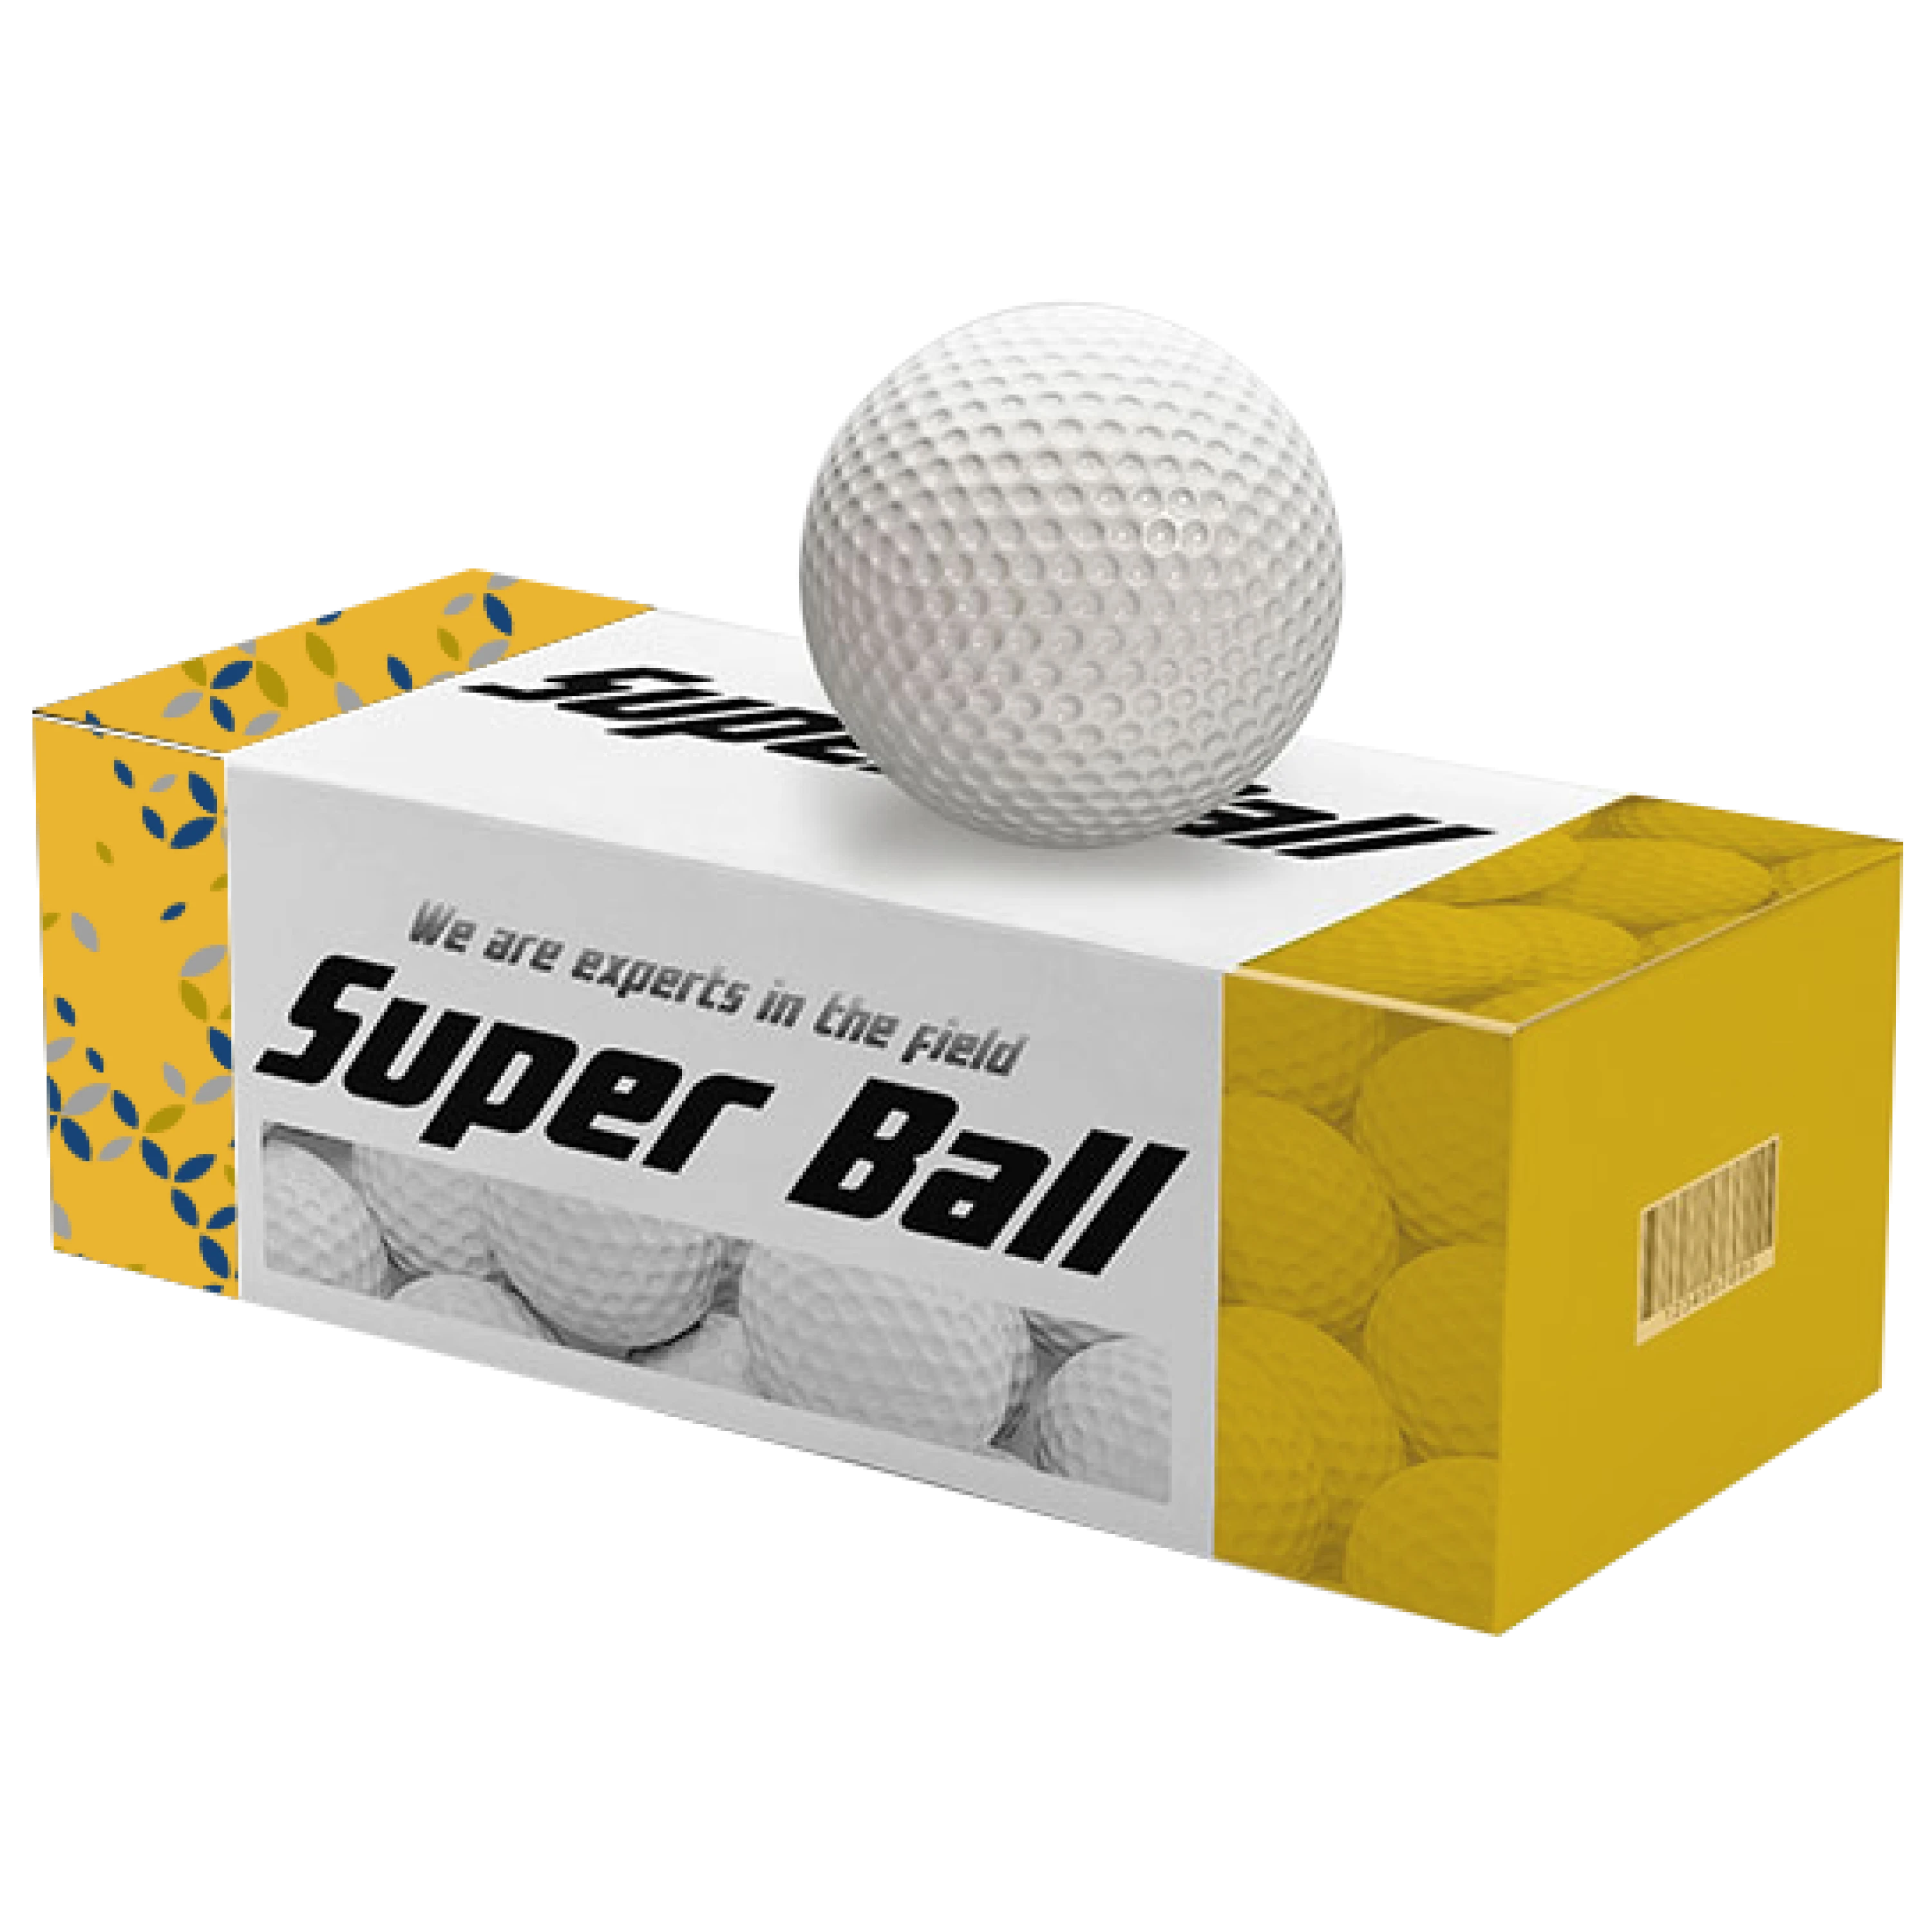 Carousel Golf Ball Packaging image 1 | The Box Lane